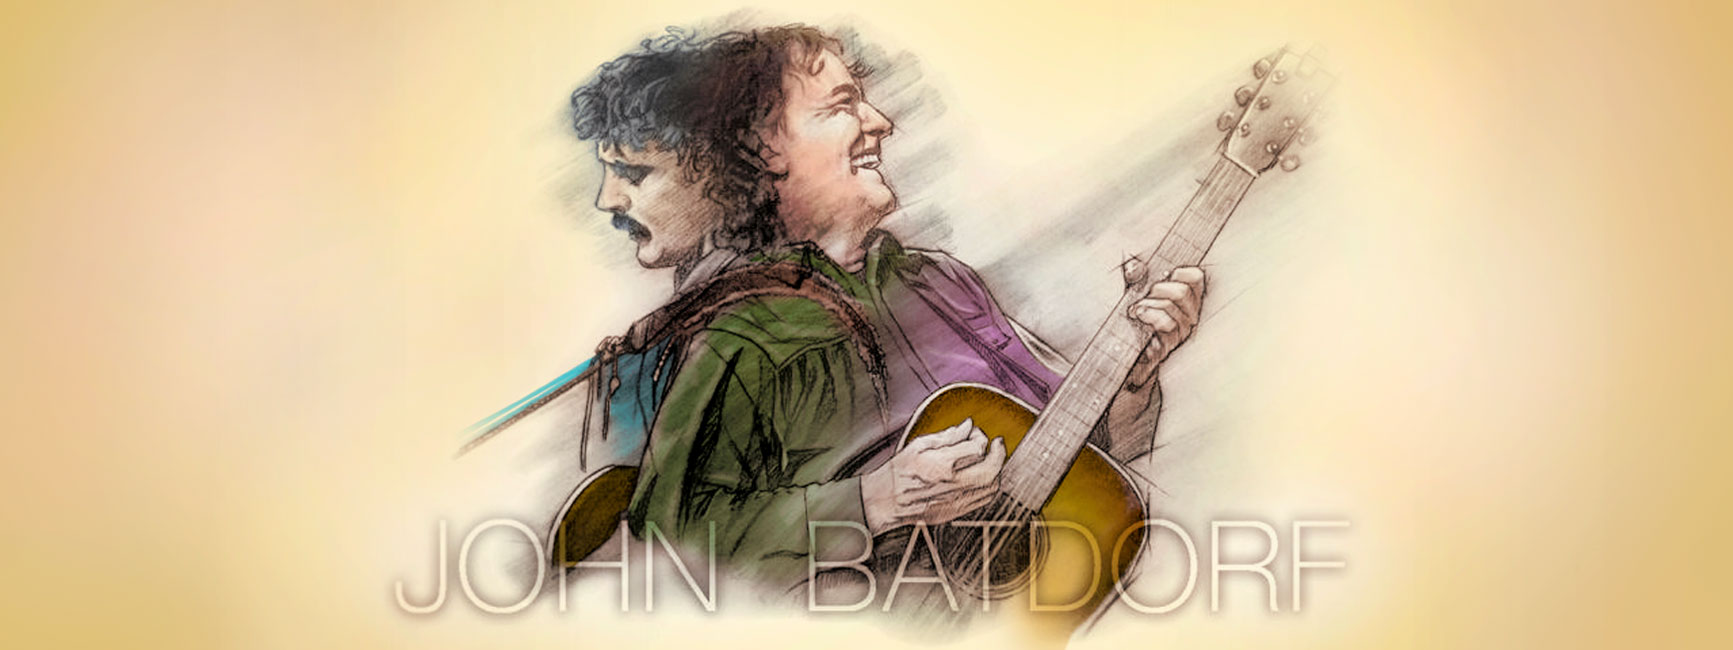 John Batdorf Music